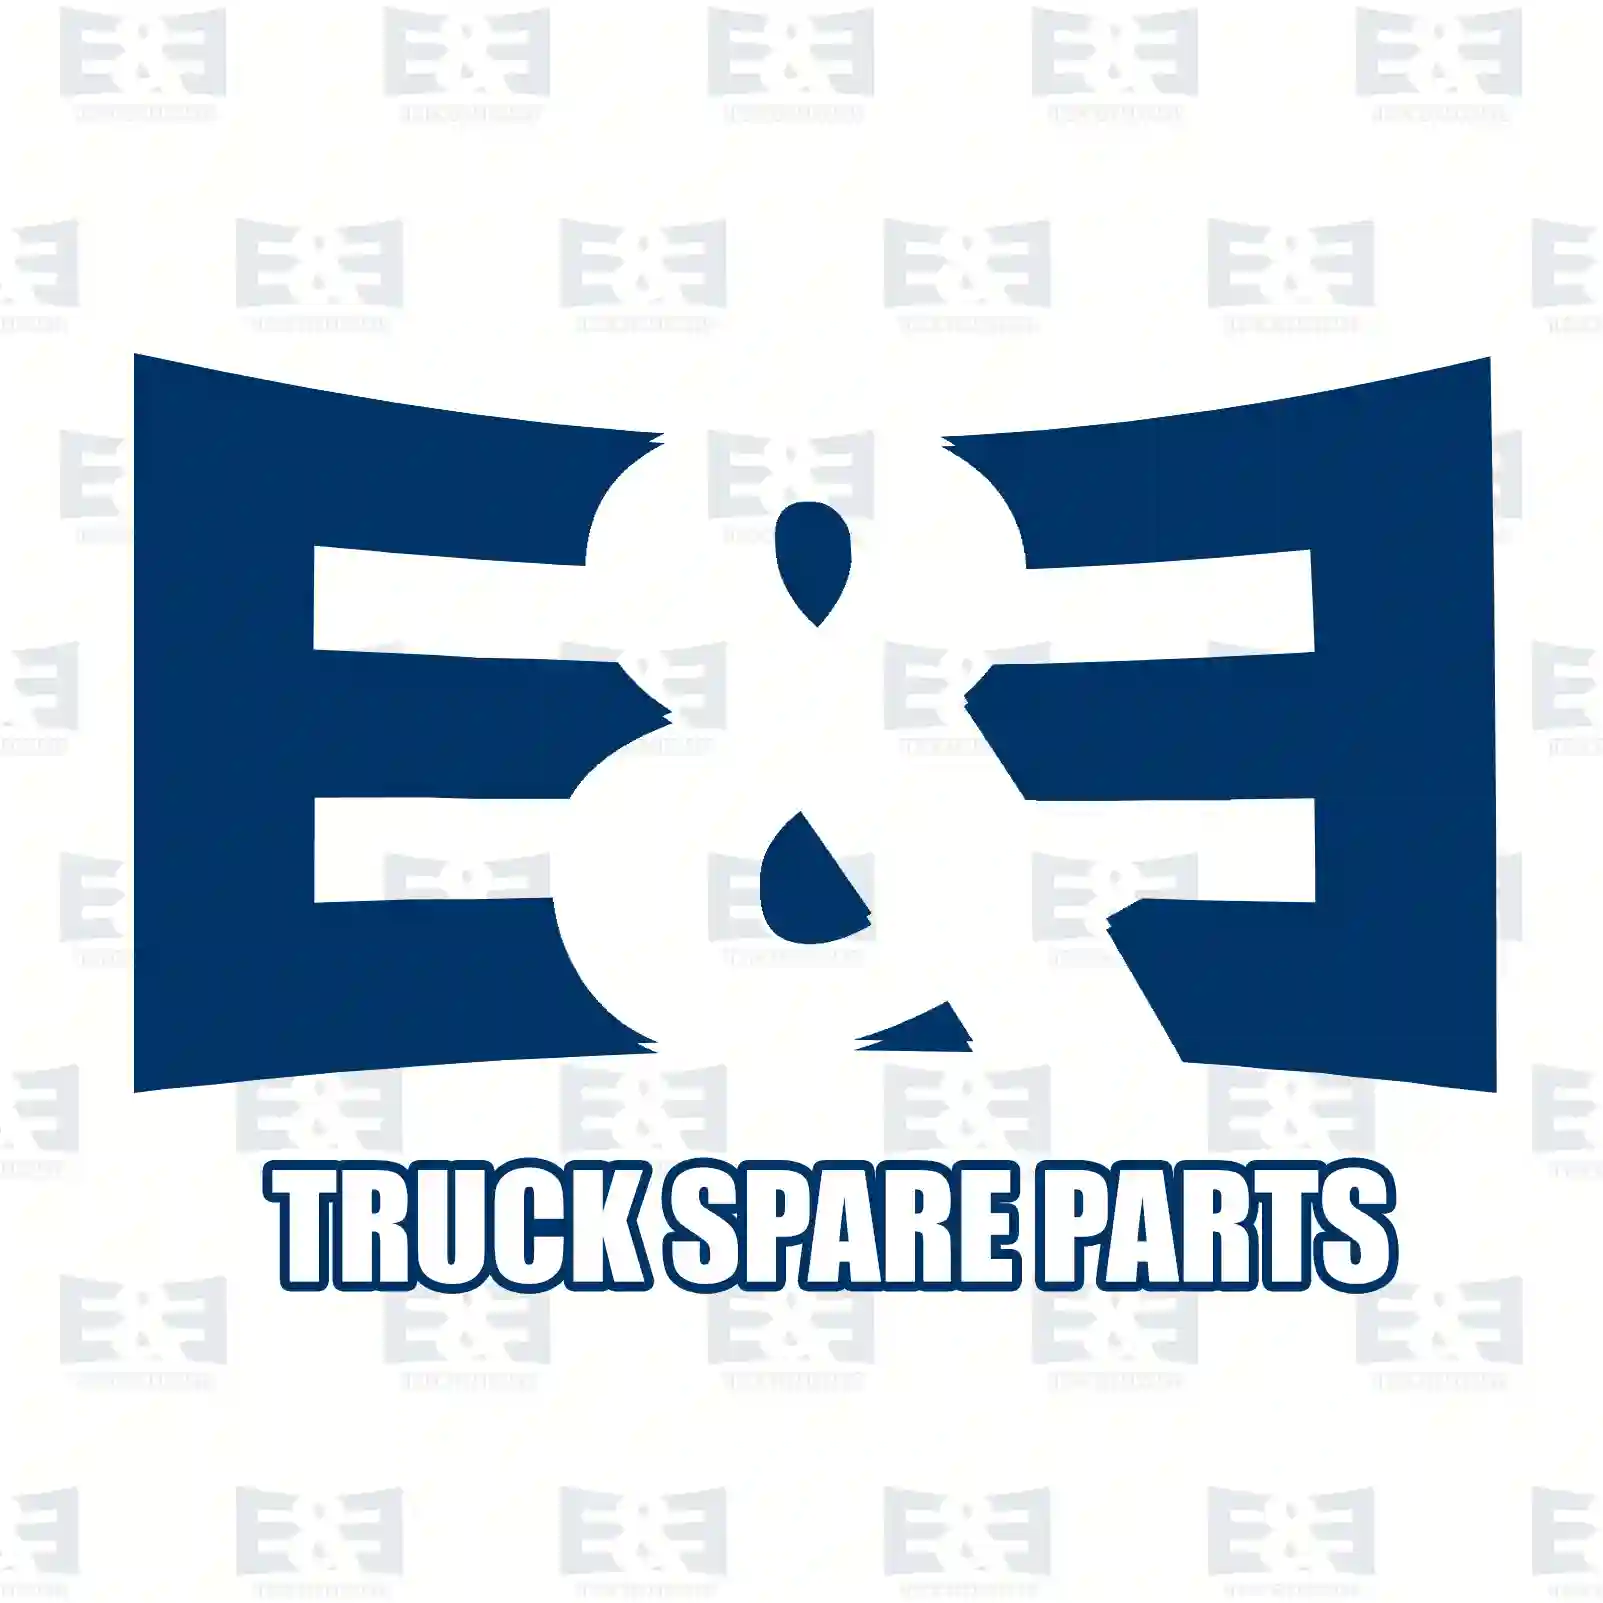 Foot brake valve, EBS, 2E2297124, 81521306275, 81521306276, 81521306298, 2V5607355 ||  2E2297124 E&E Truck Spare Parts | Truck Spare Parts, Auotomotive Spare Parts Foot brake valve, EBS, 2E2297124, 81521306275, 81521306276, 81521306298, 2V5607355 ||  2E2297124 E&E Truck Spare Parts | Truck Spare Parts, Auotomotive Spare Parts